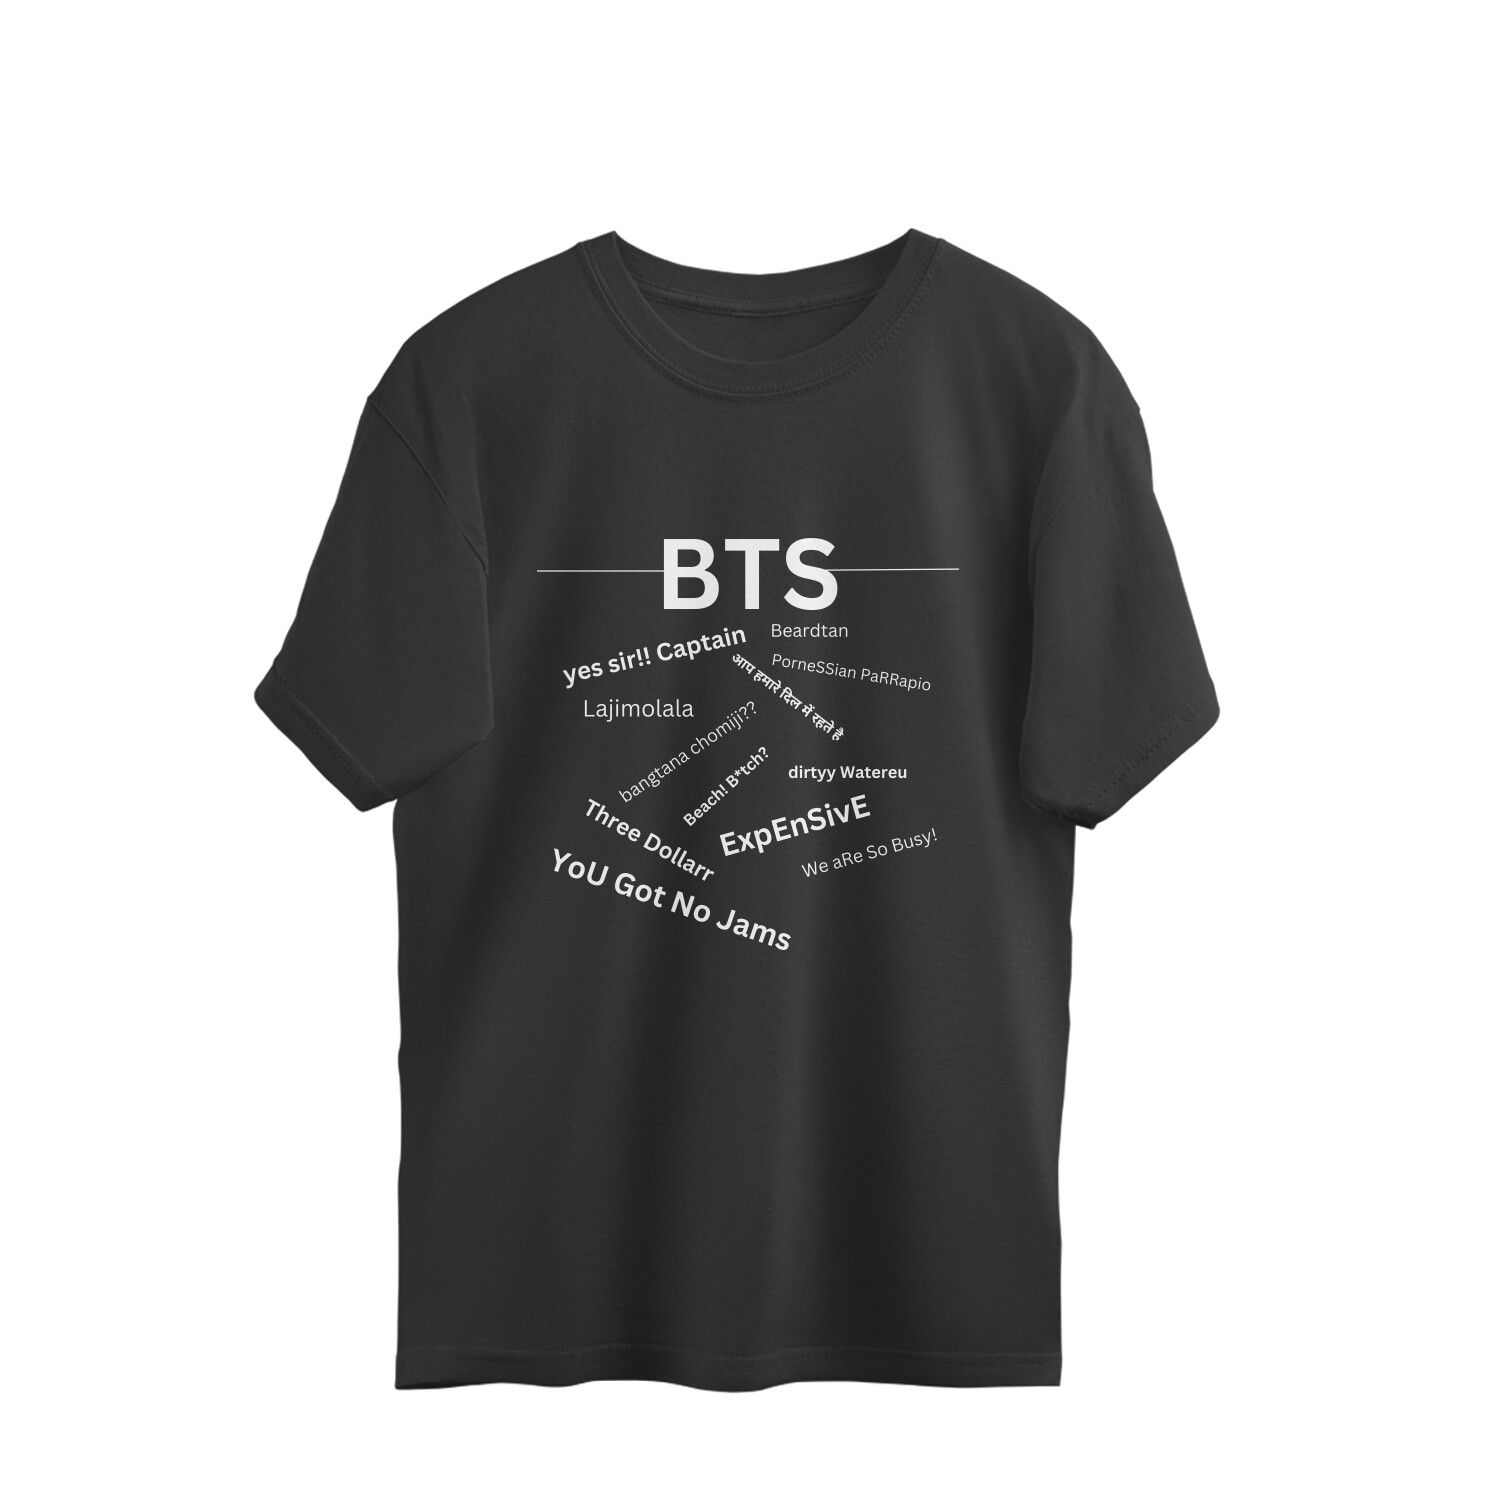 BTS oversized t-shirt